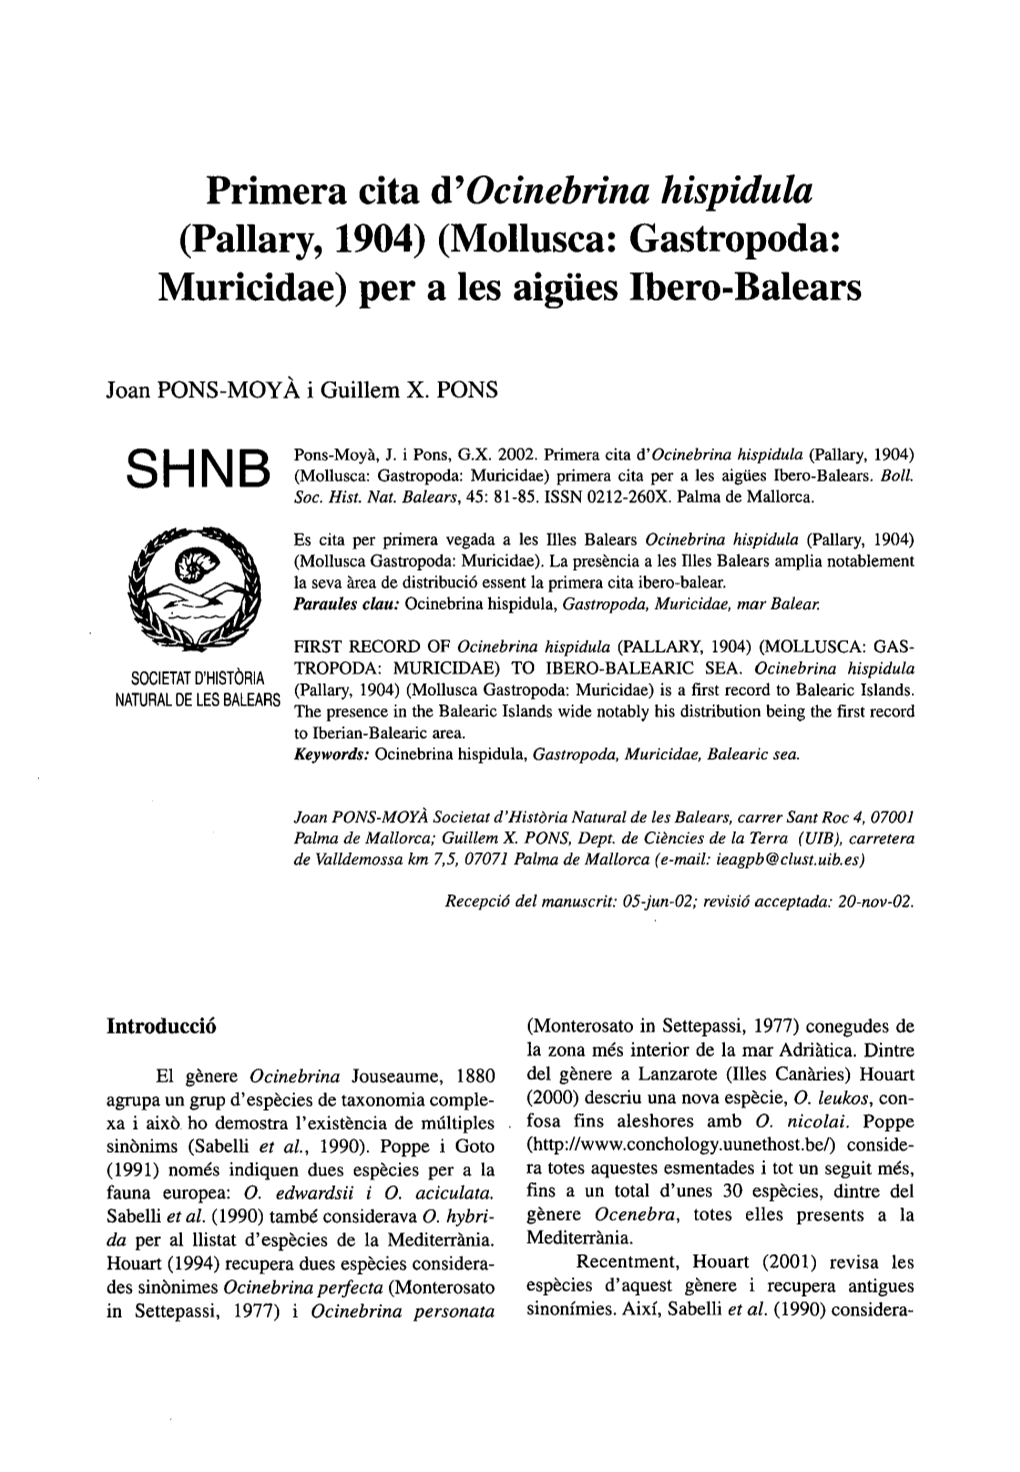 Primera Cita D' Ocinebrina Hispidula (Pallary, 1904) (Mollusca: Gastropoda: Muricidae) Per a Les Aigües Ibero-Balears